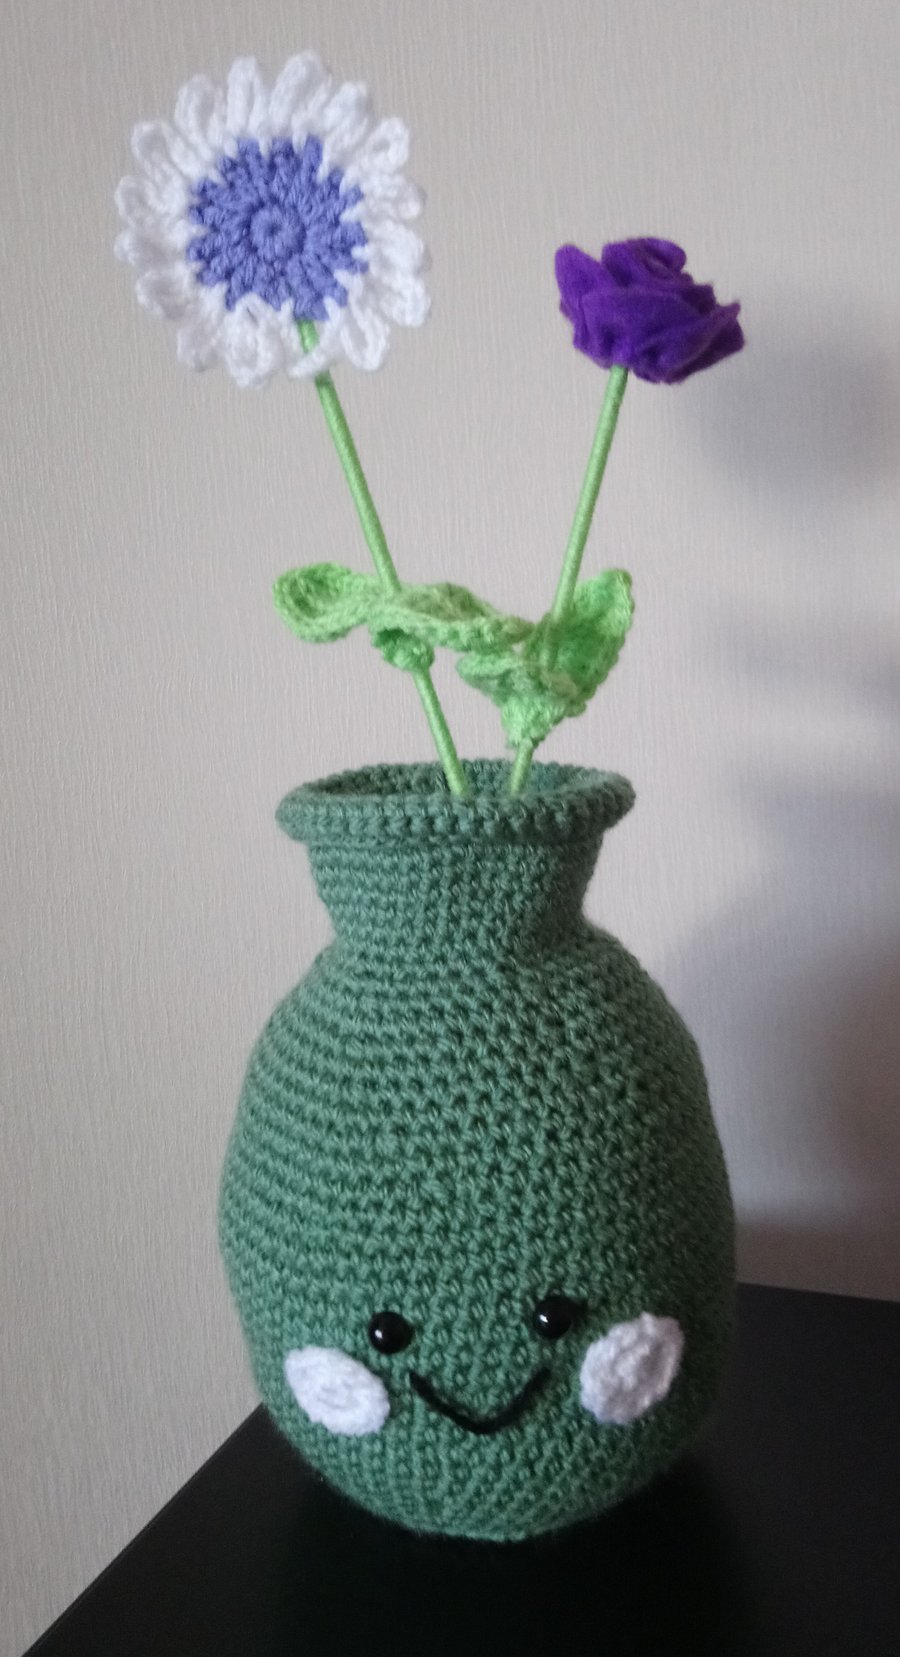 Crotchet vase with crotchet flowers